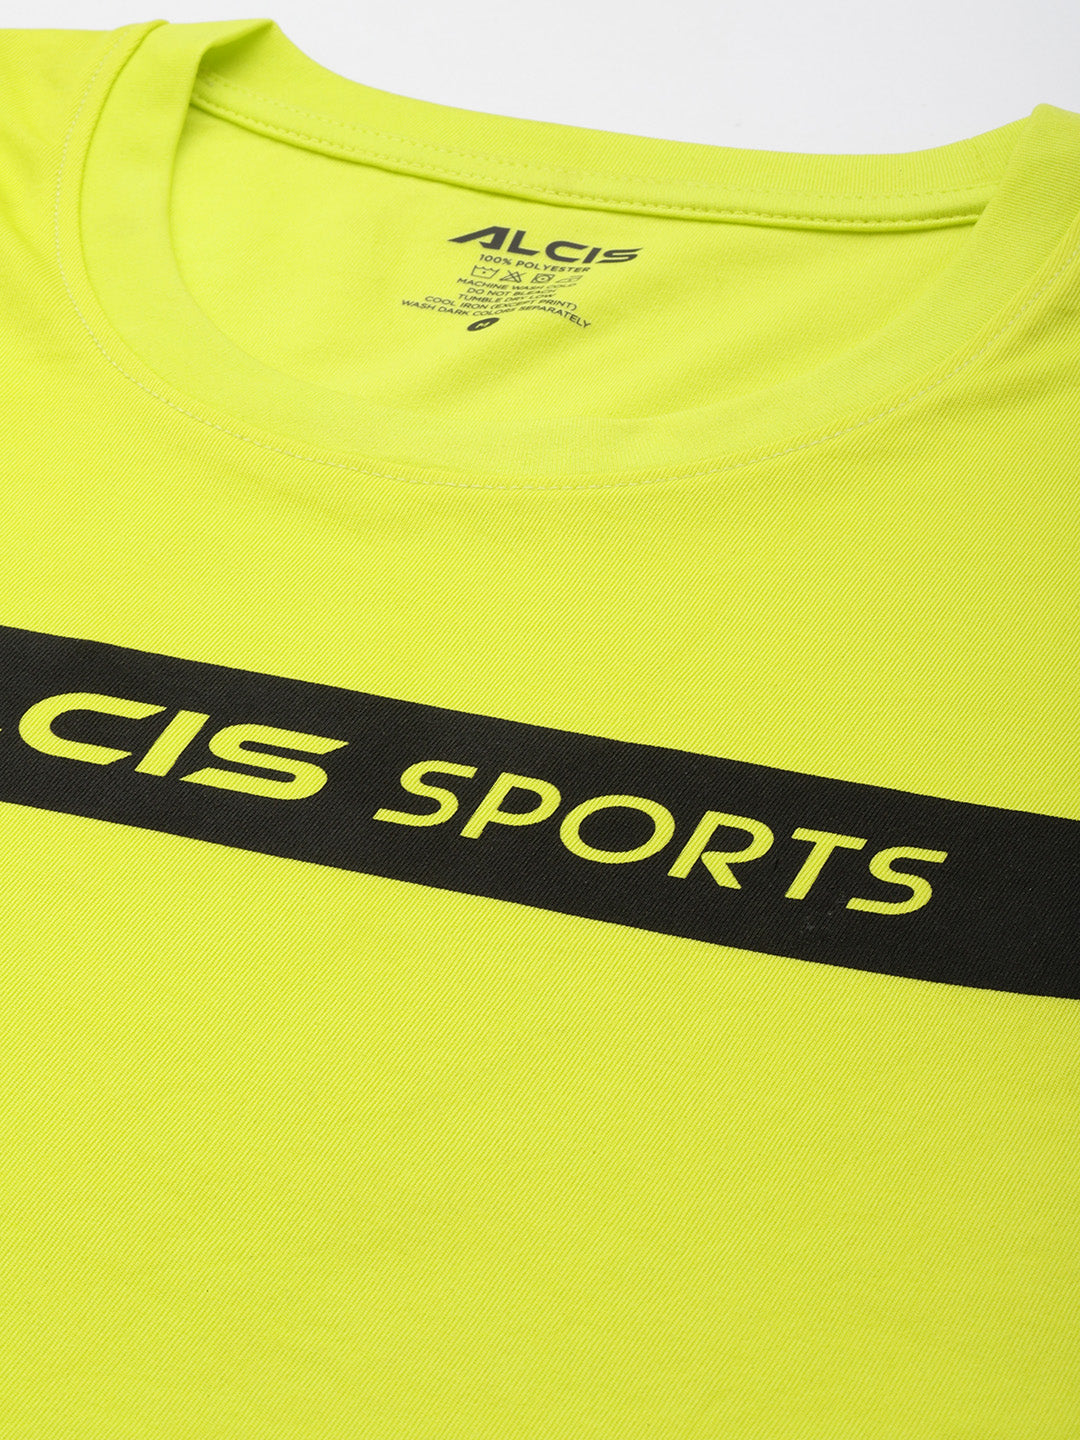 Alcis Men Neon Yellow Printed Slim Fit T-shirt